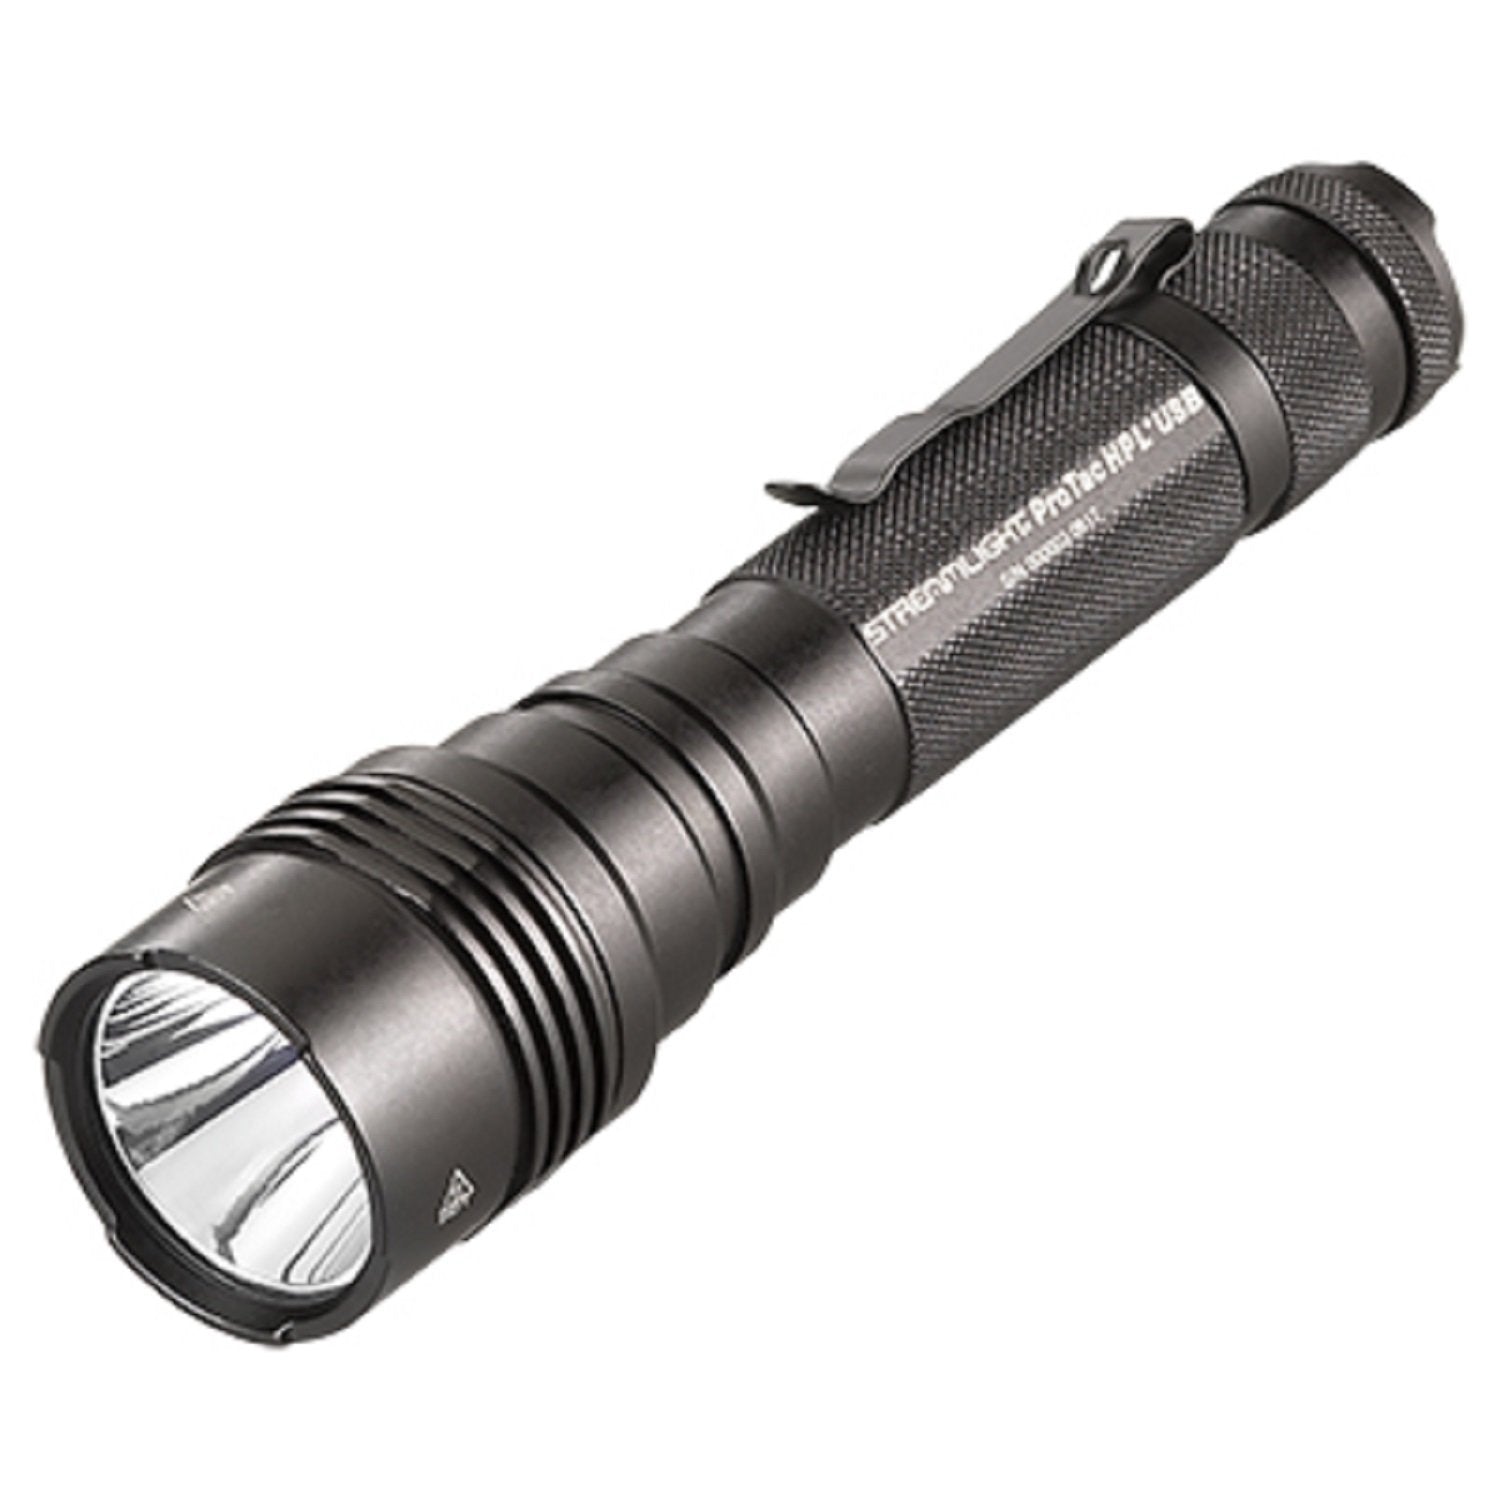 Streamlight Protac HPL USB Rechargeable 1000-Lumens Tactical Flashlight Black Tactical Distributors Ltd New Zealand